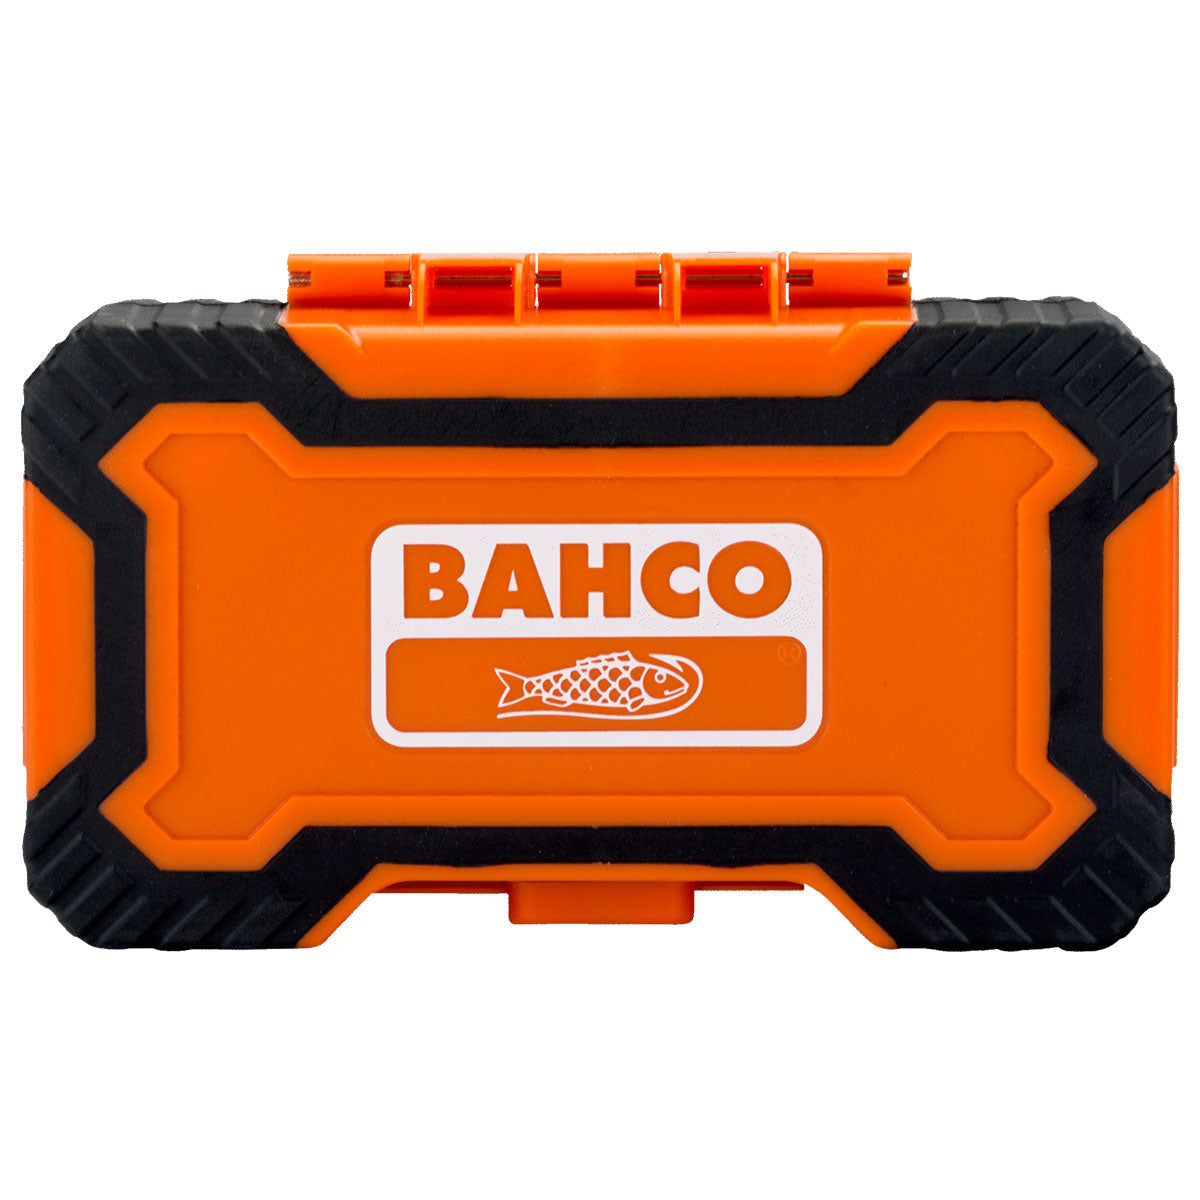 Bahco Screwdriver Bit Set 54 Piece with 2 Bit Holders 59/S54BC